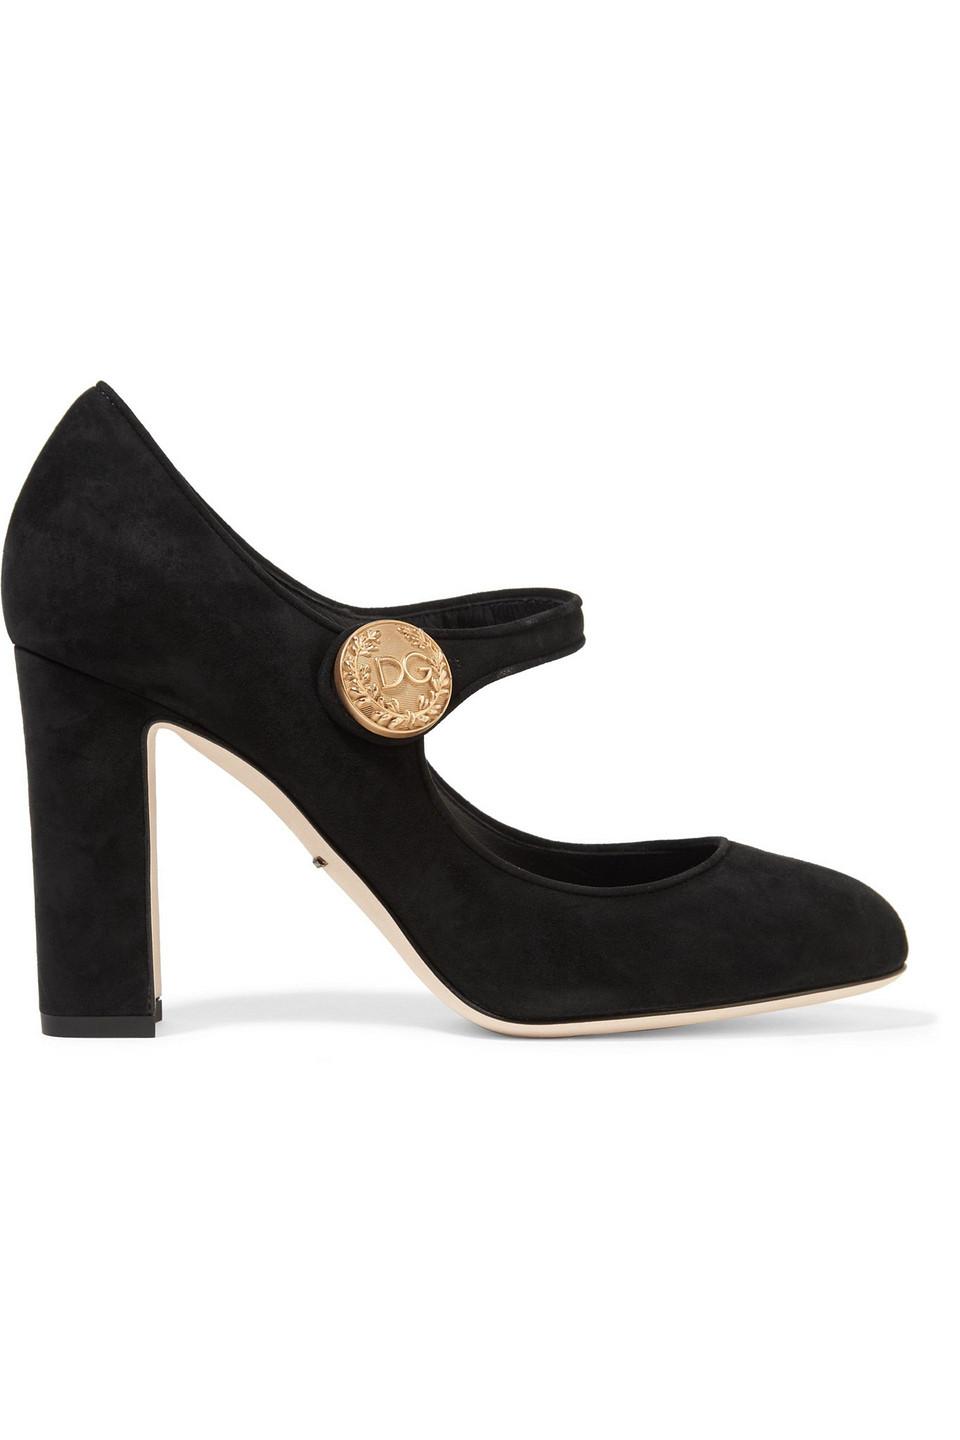 Dolce & Gabbana Mary Jane Pumps in Black | Lyst